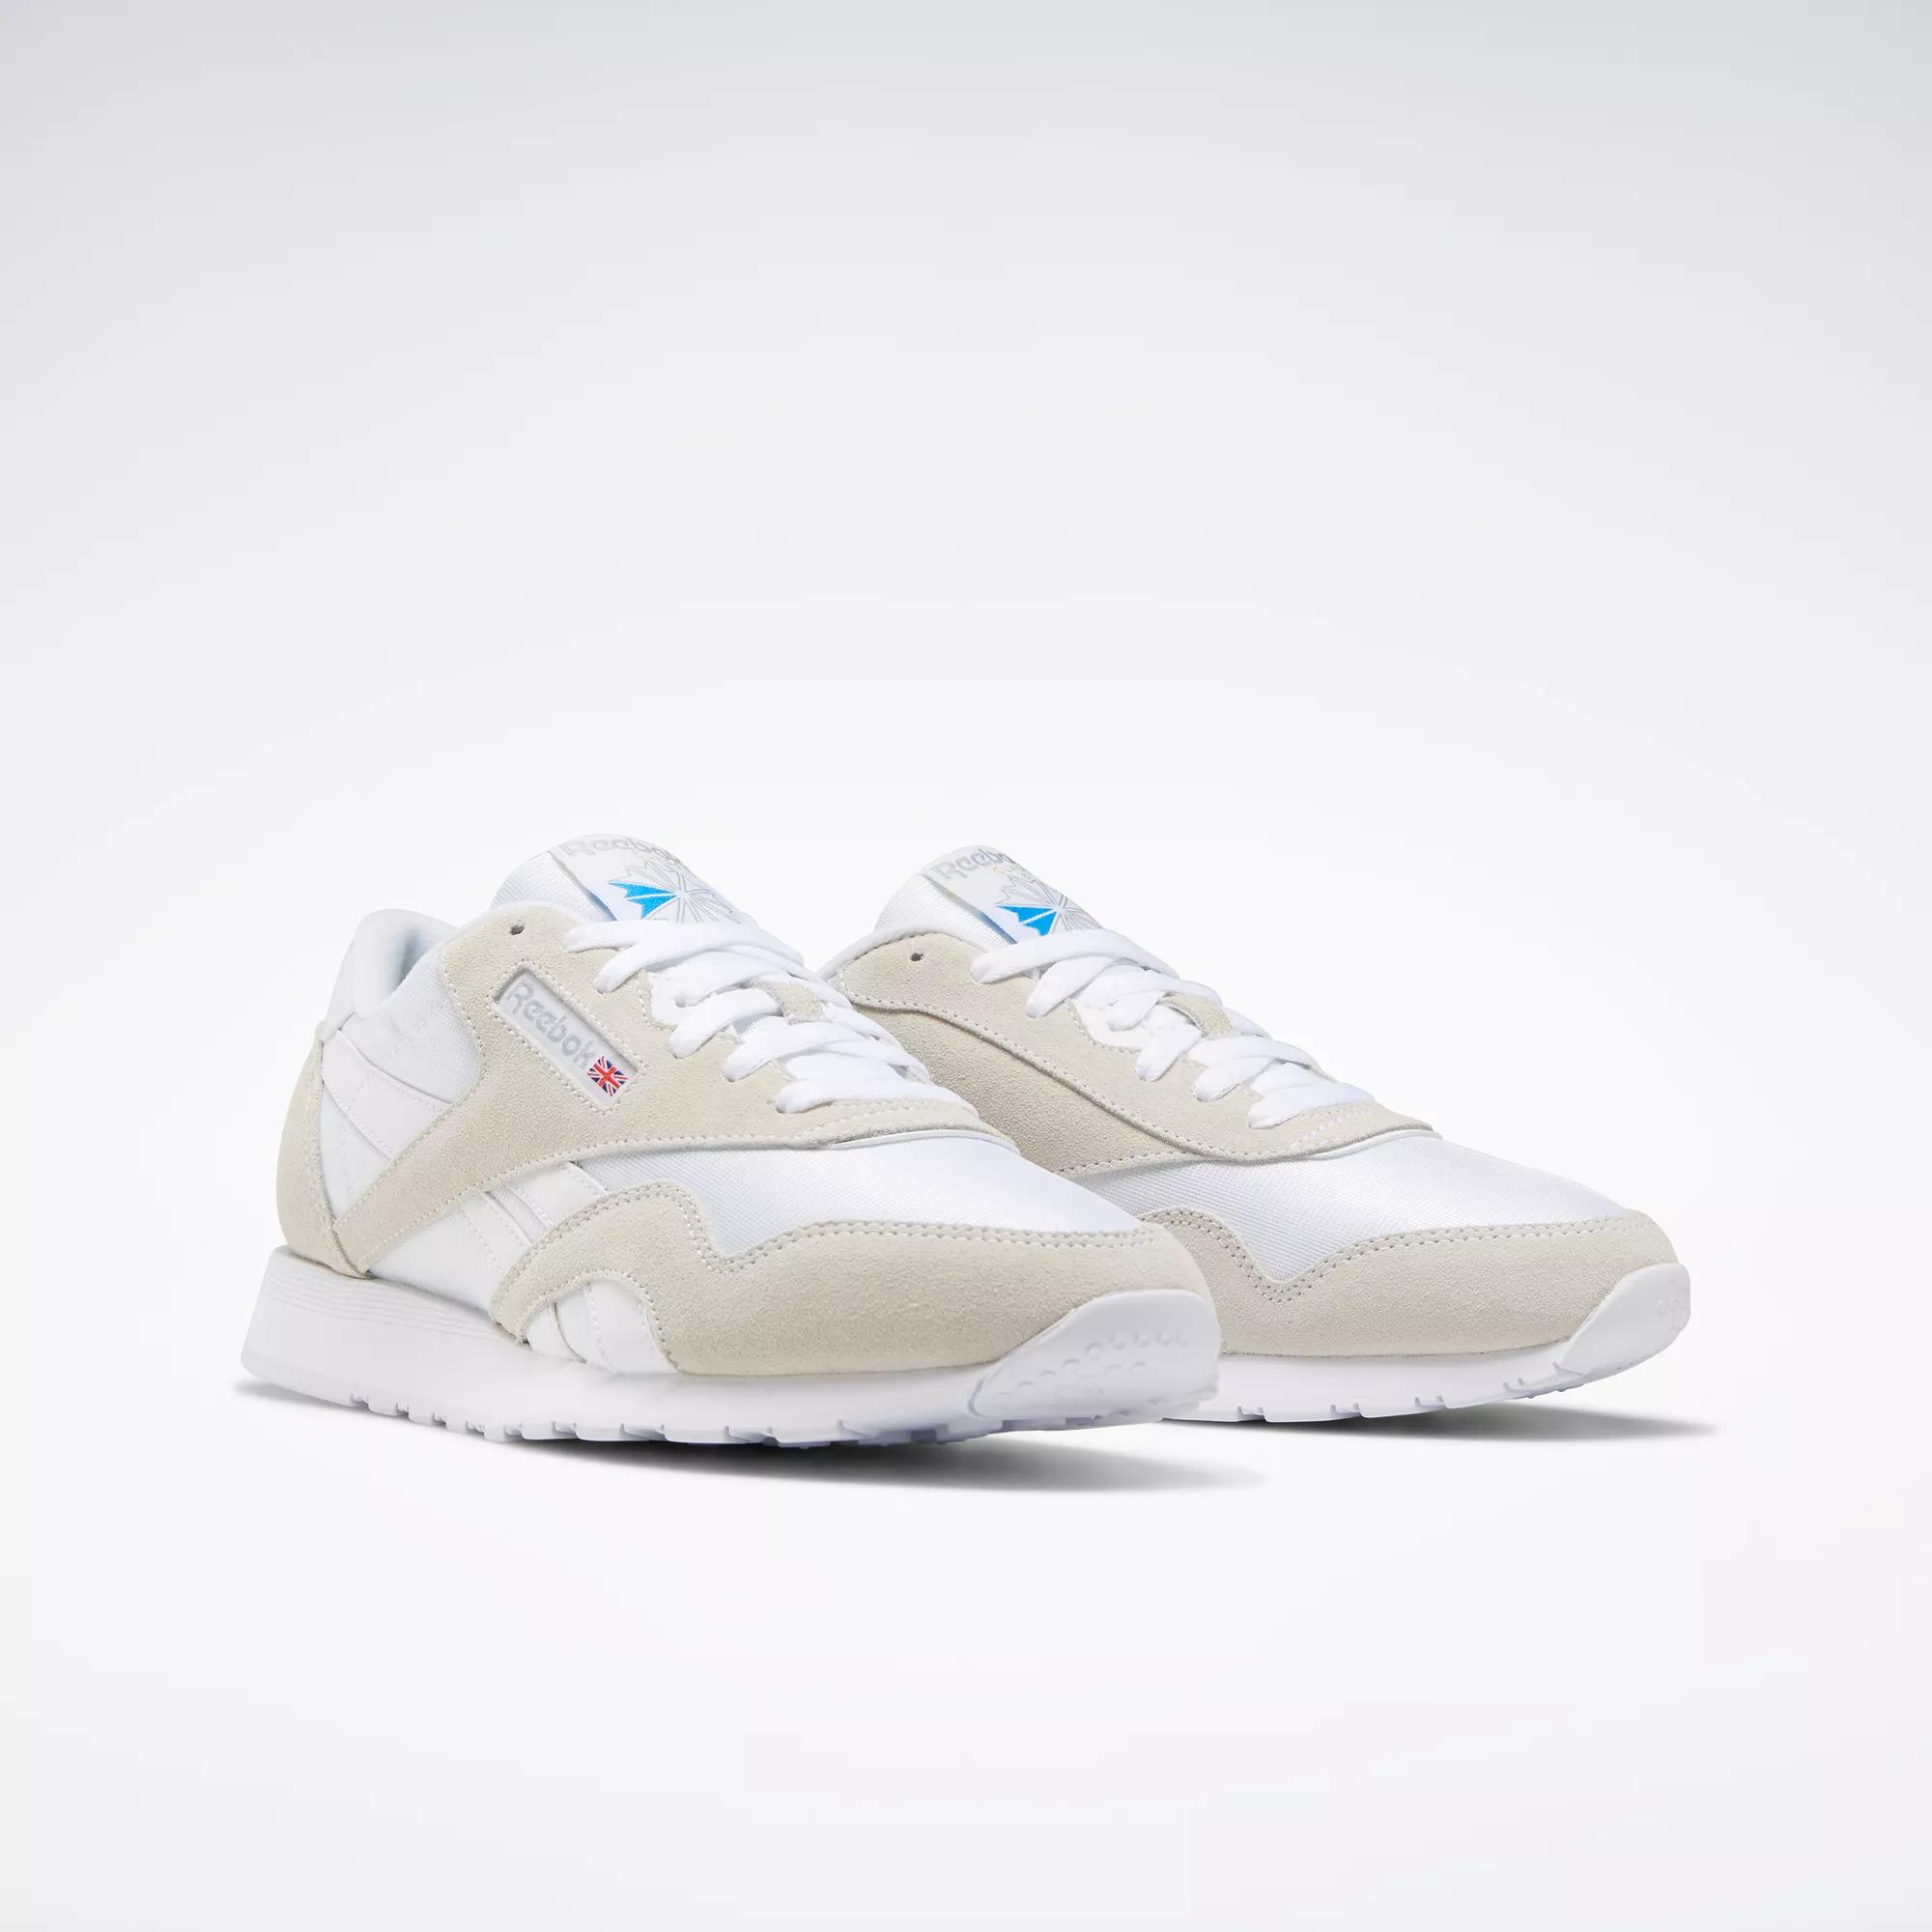 Classic Men's Shoes - White / White / Light | Reebok